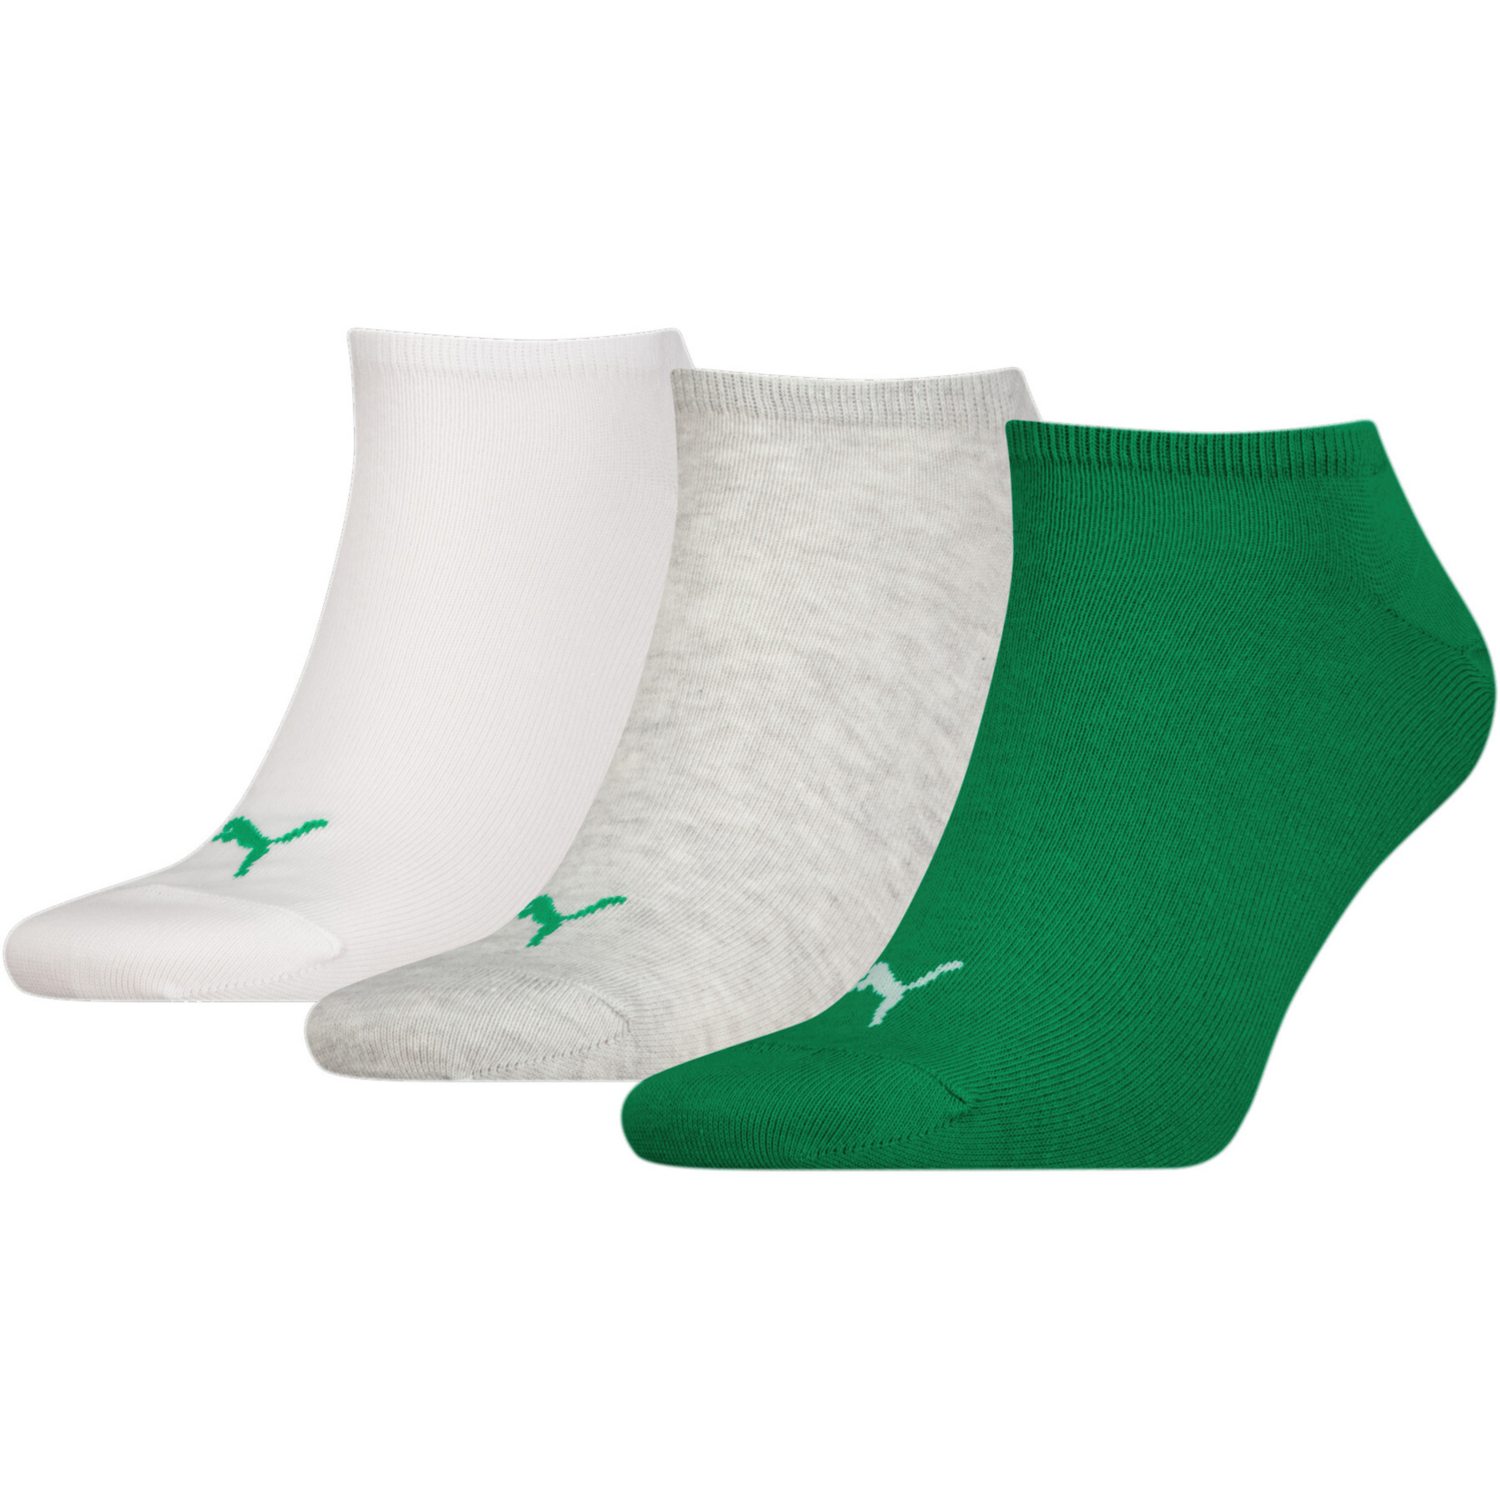 Носки Puma Unisex Sneaker Plain 3P 39-42 3 пары белые, серые, зеленые фото 